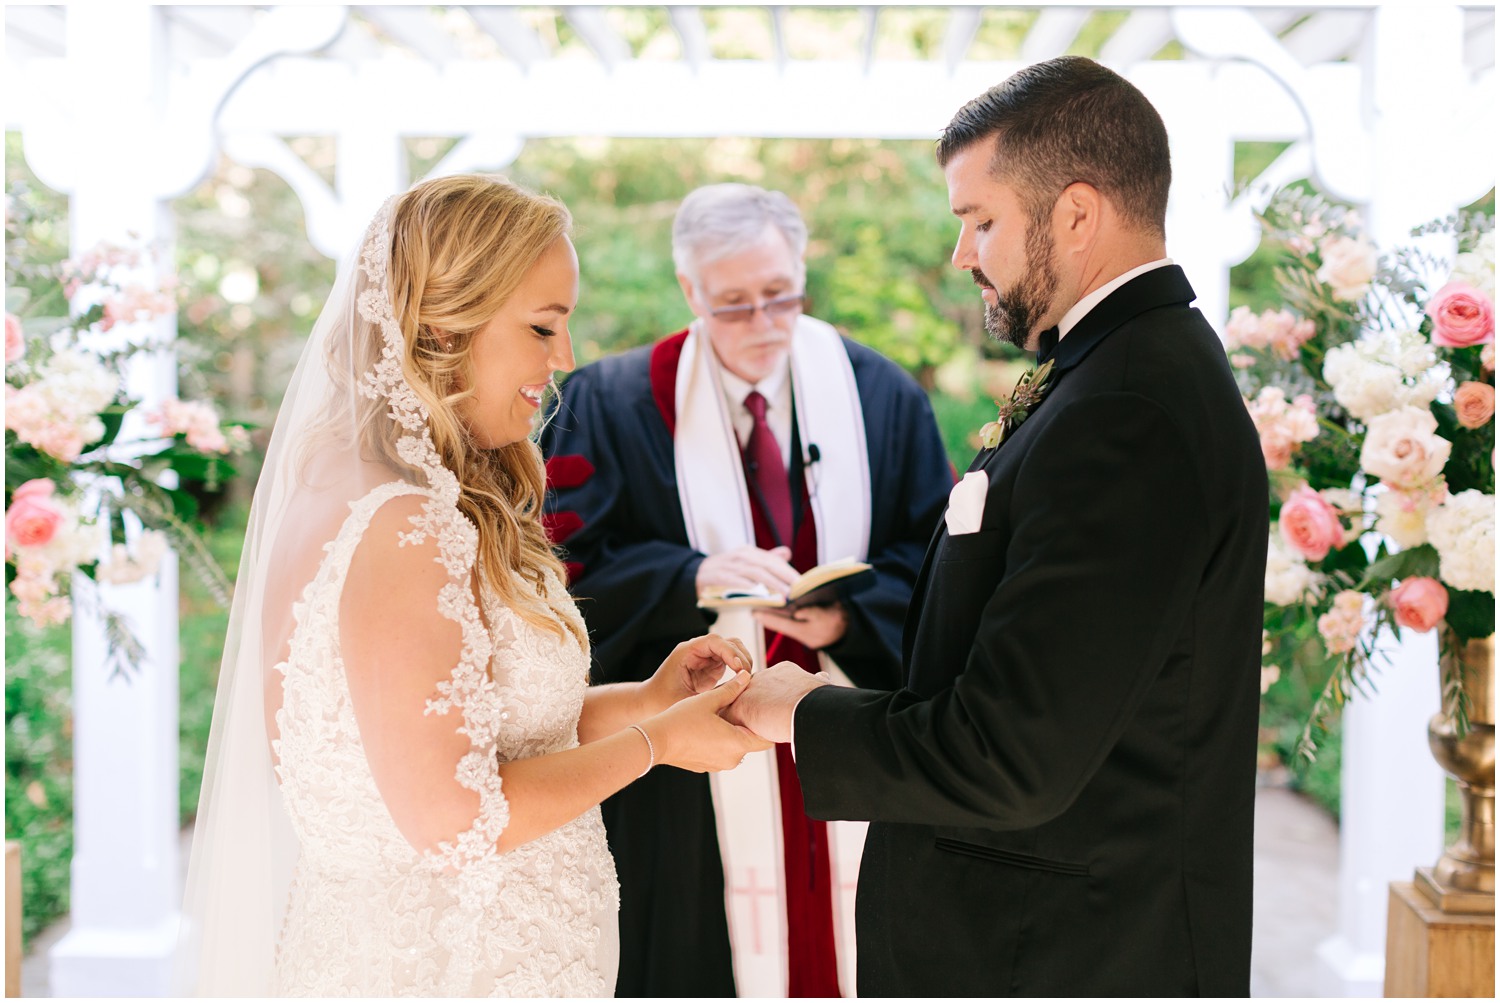 bride puts ring on groom's finger during wedding ceremony in Highlands NC